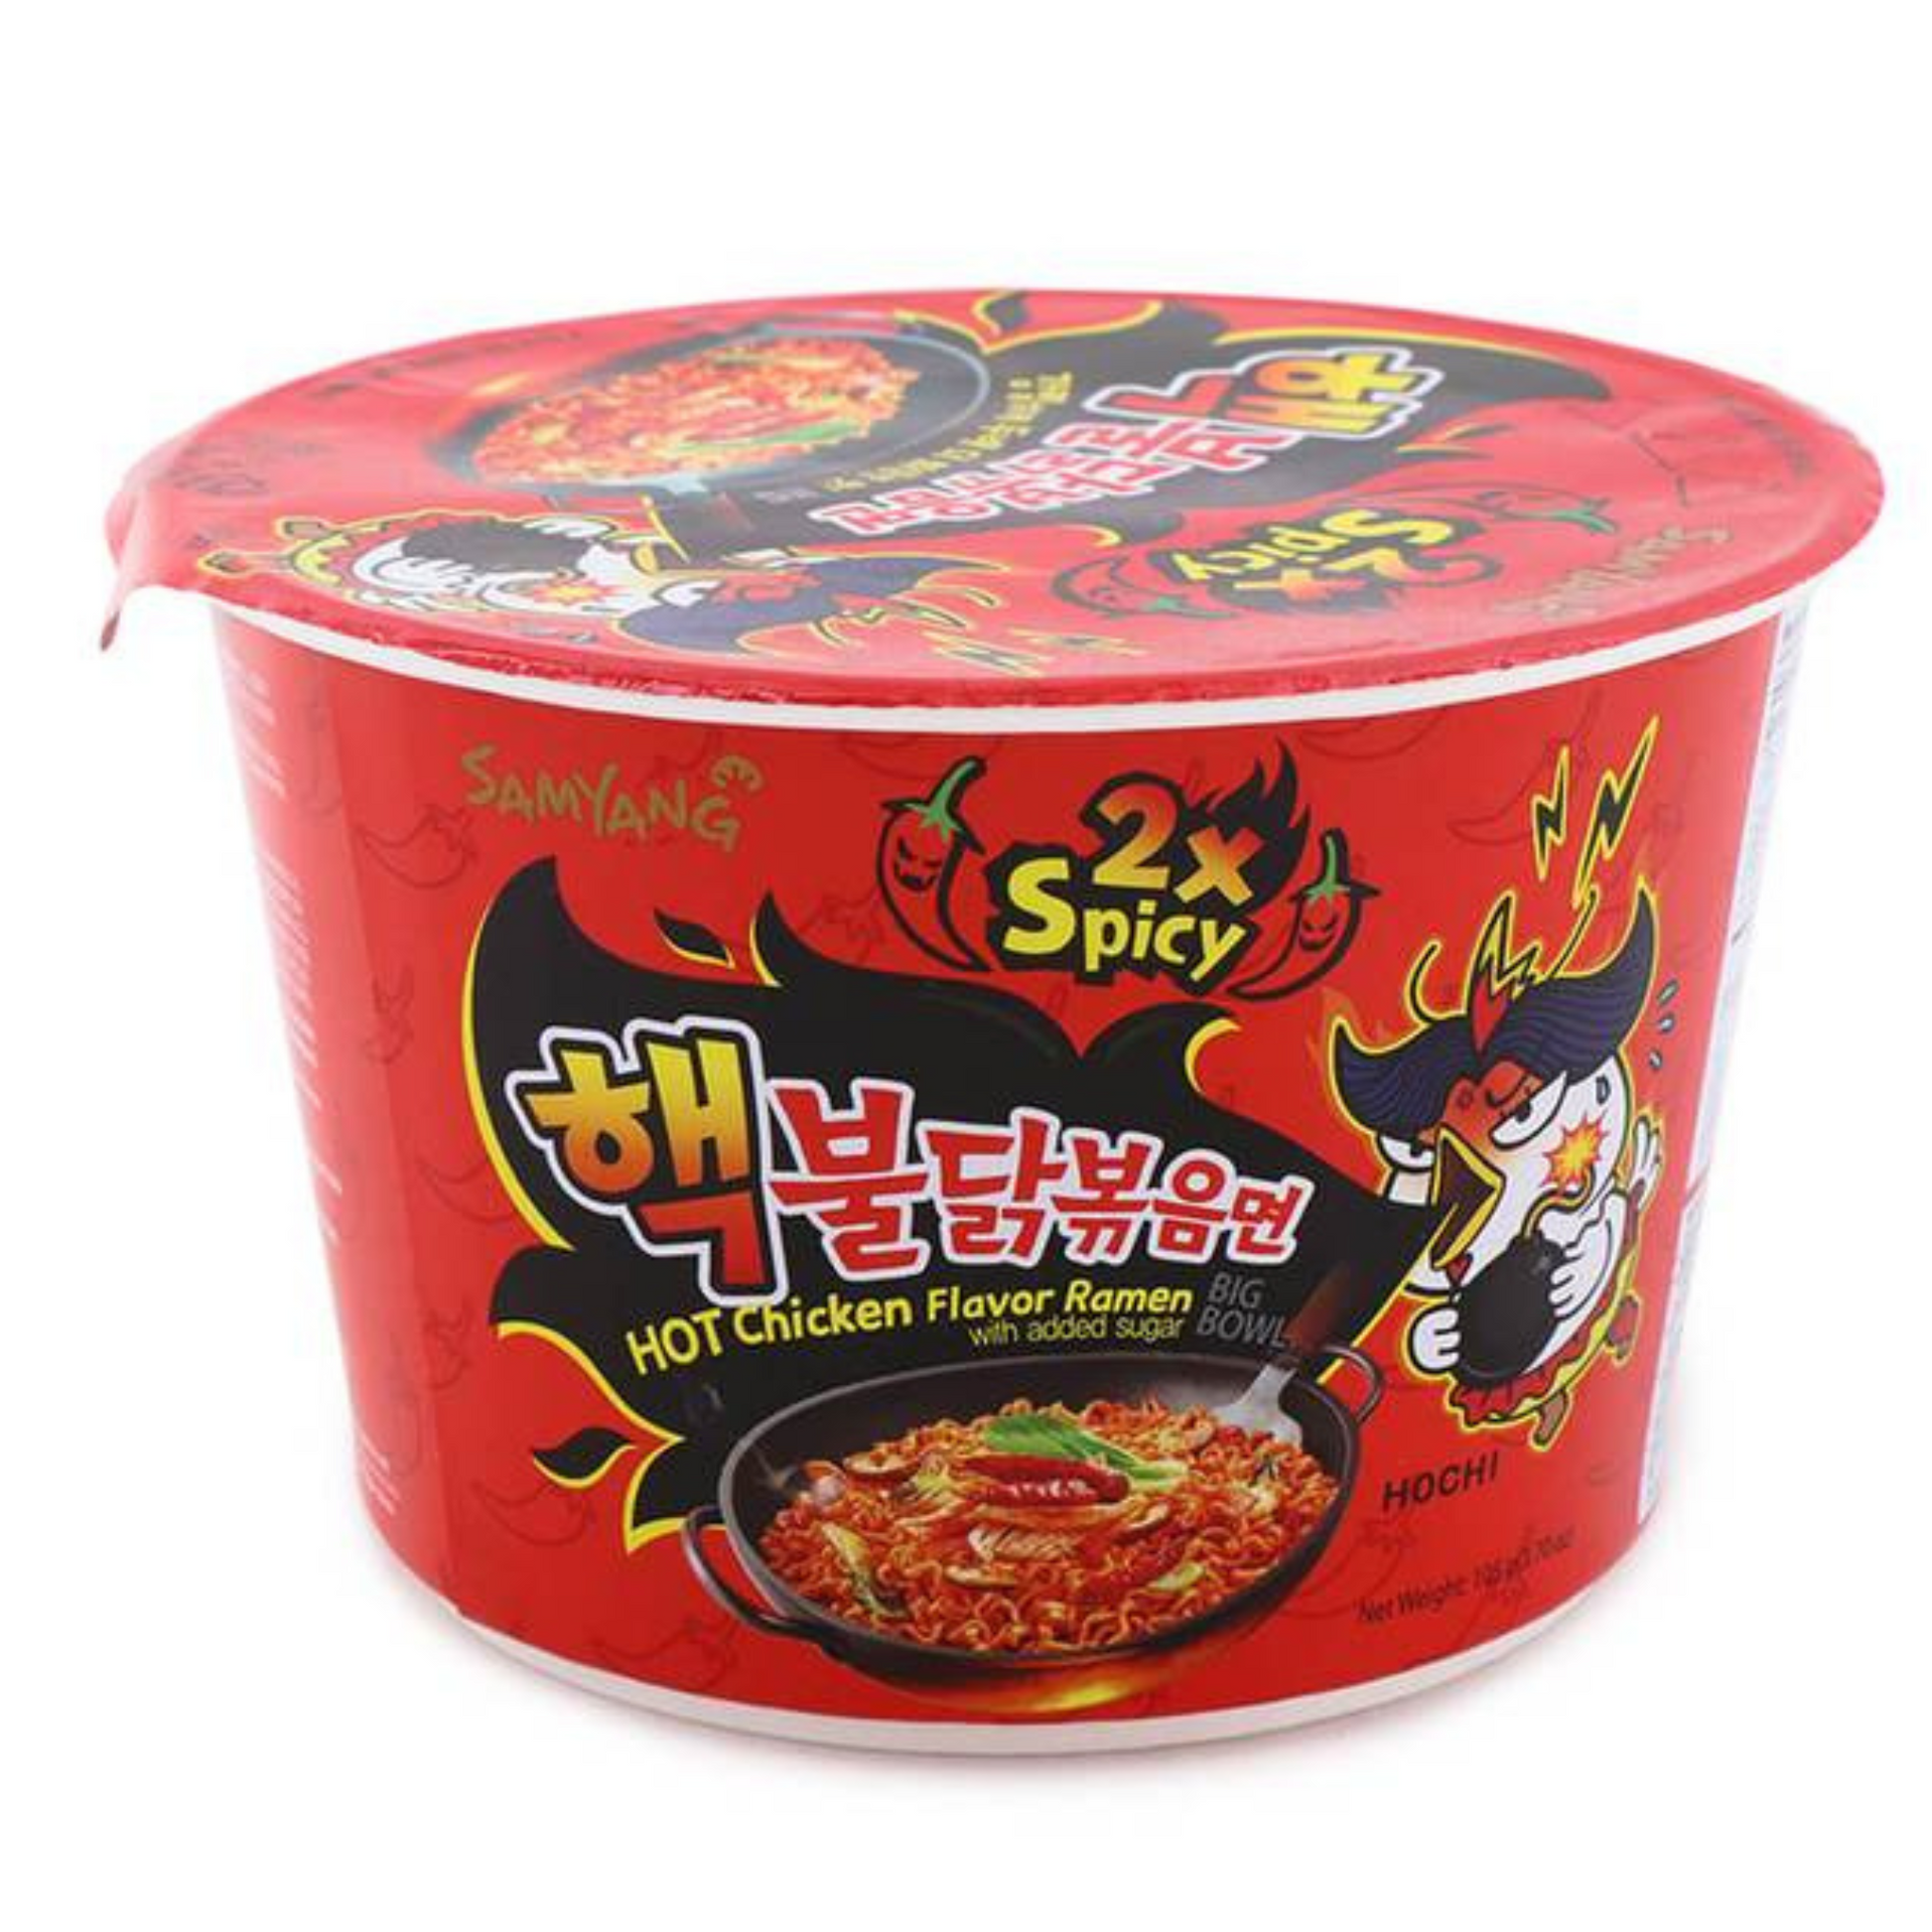 Buy Samyang Buldak Hot Chicken Ramen Cup